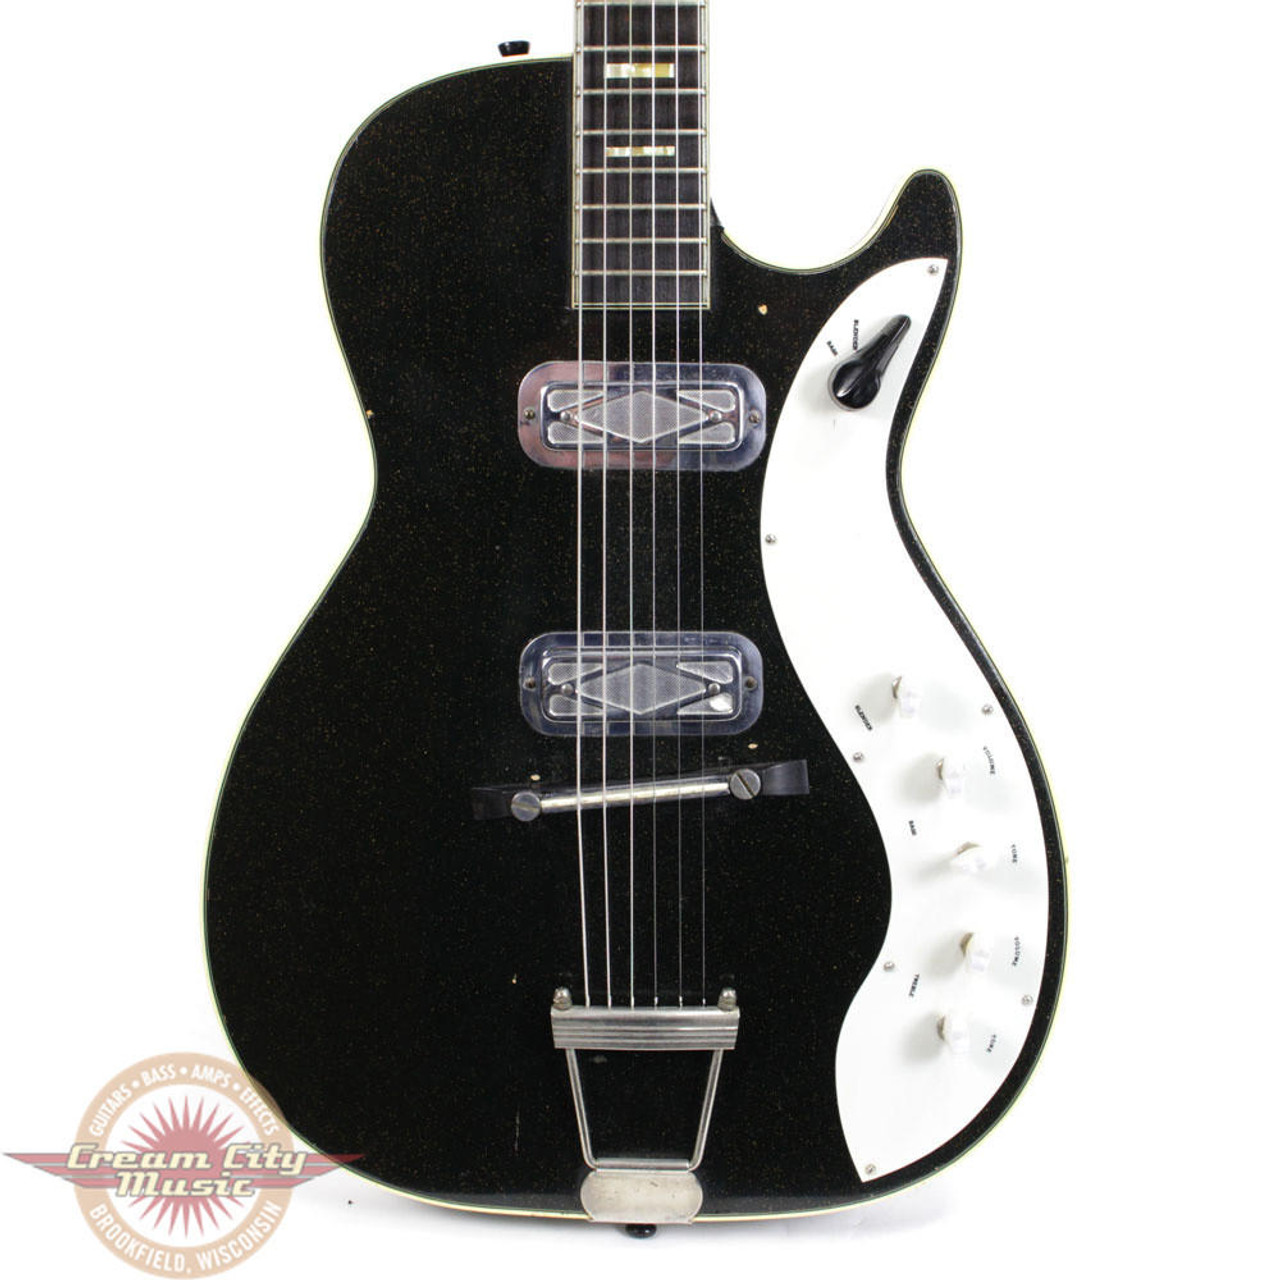 Vintage 1960s Harmony Jupiter Electric Guitar